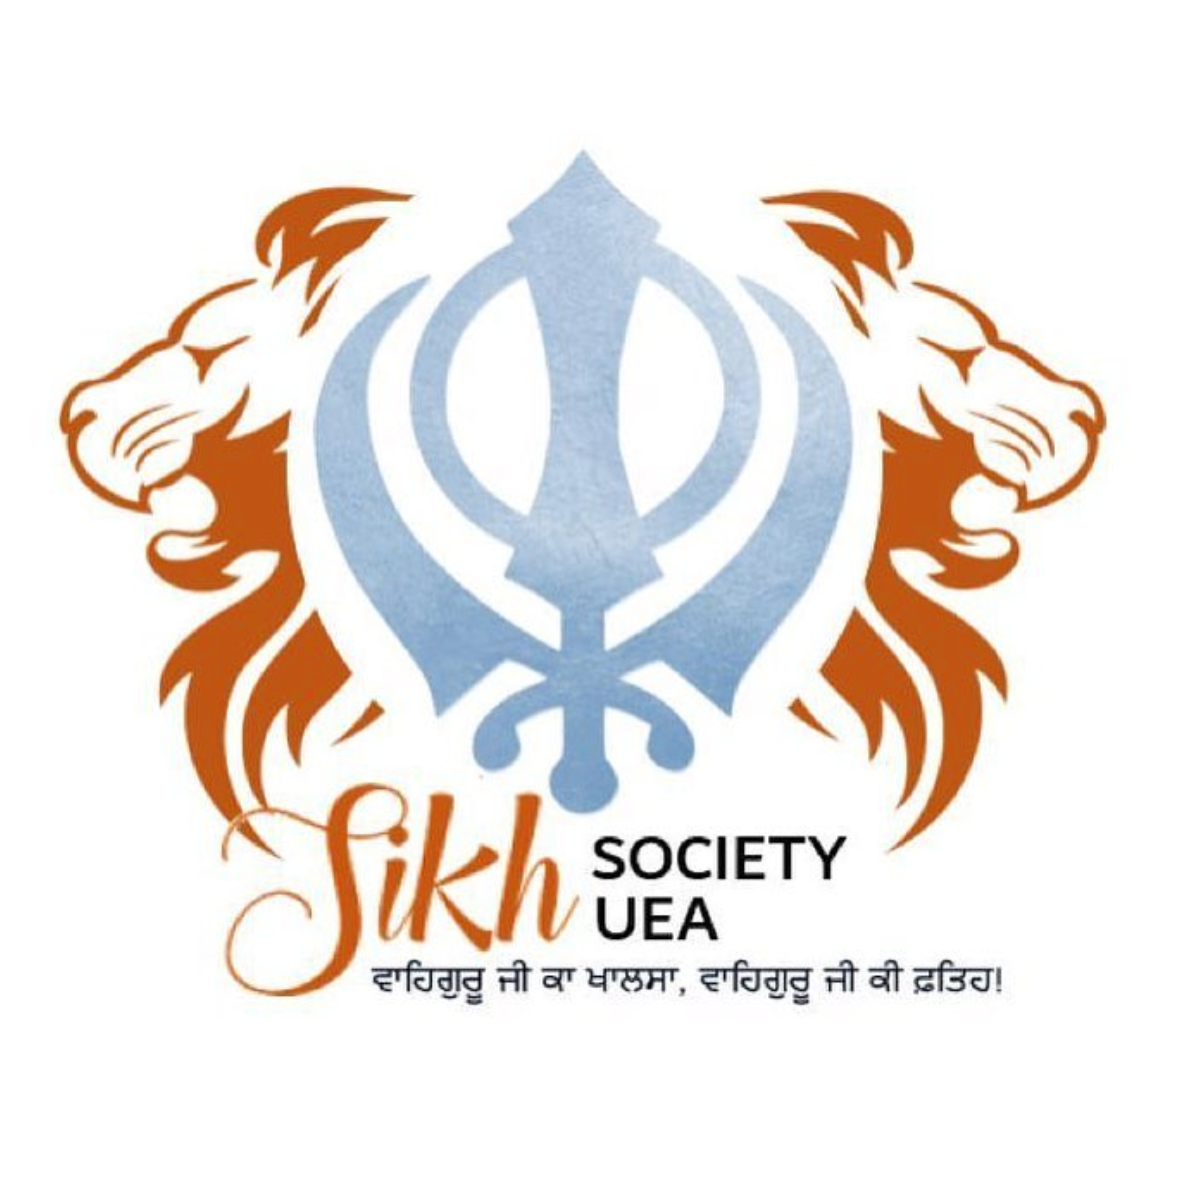 University of East Anglia (UEA) Sikh Society